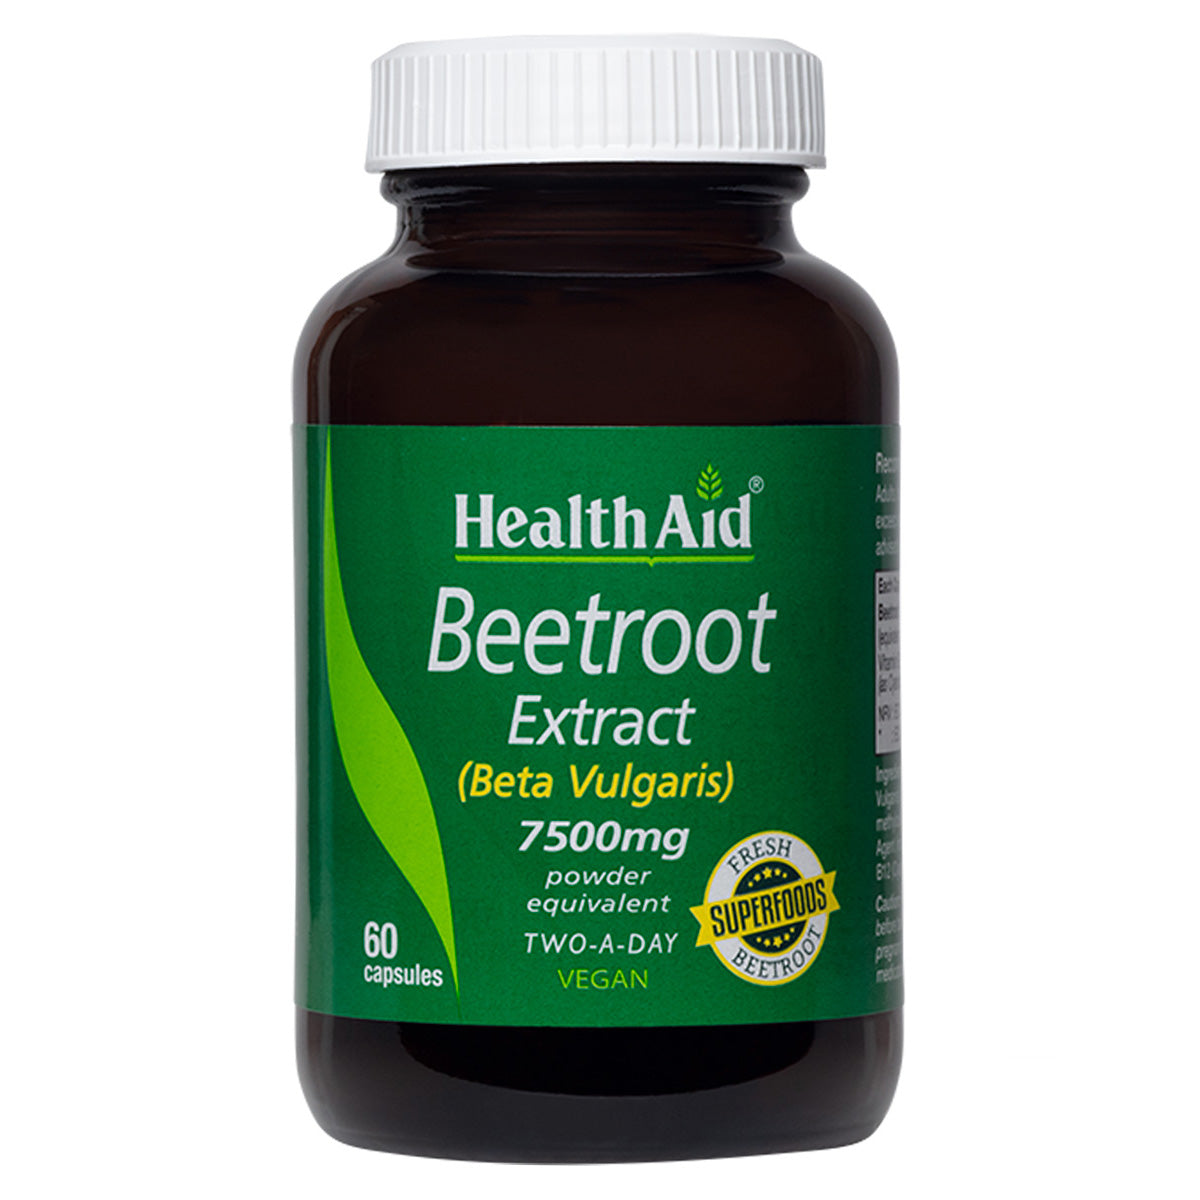 Beetroot Extract Capsules Benefits